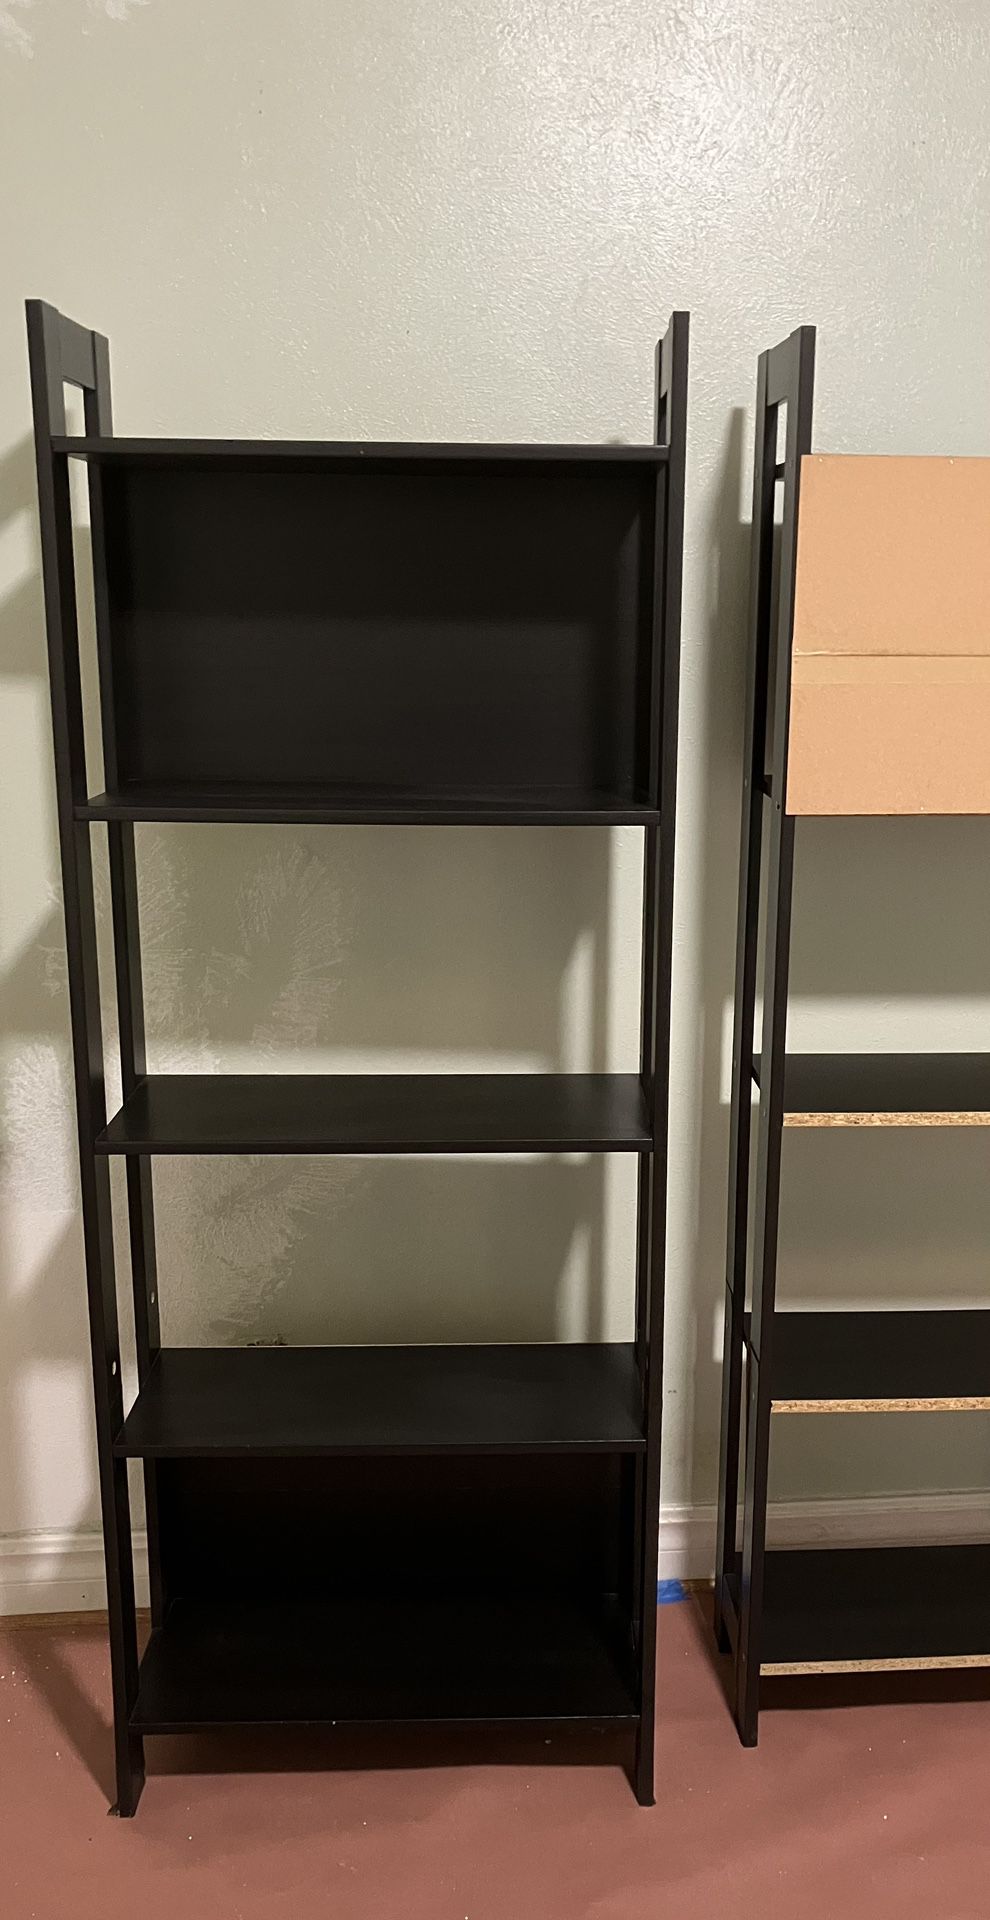 IKEA Bookcase, 5 Shelf Bookshelf, Espresso Brown [2 Of 5]